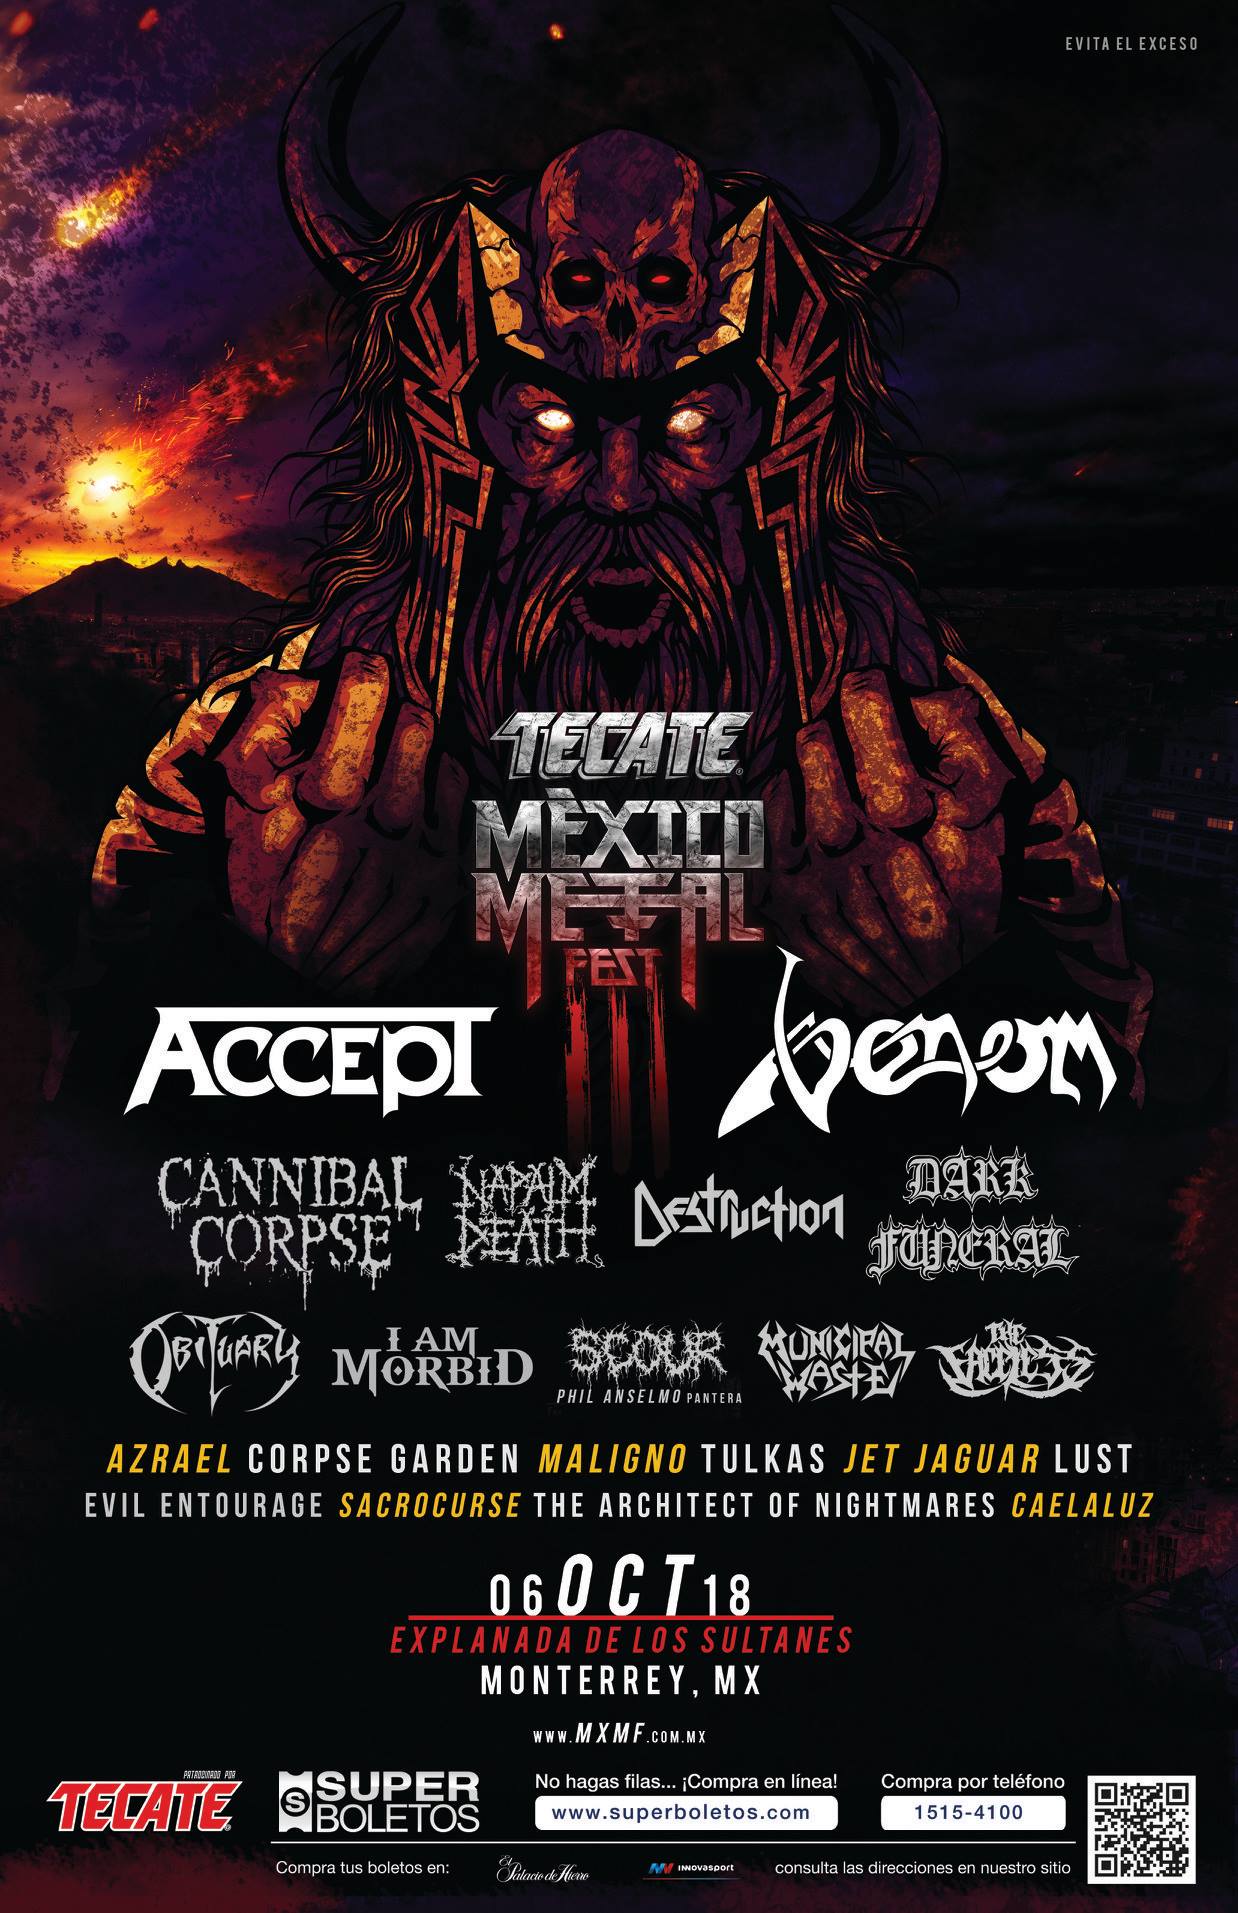 Venom Mexico 2018 festival setlist pictures videos black metal